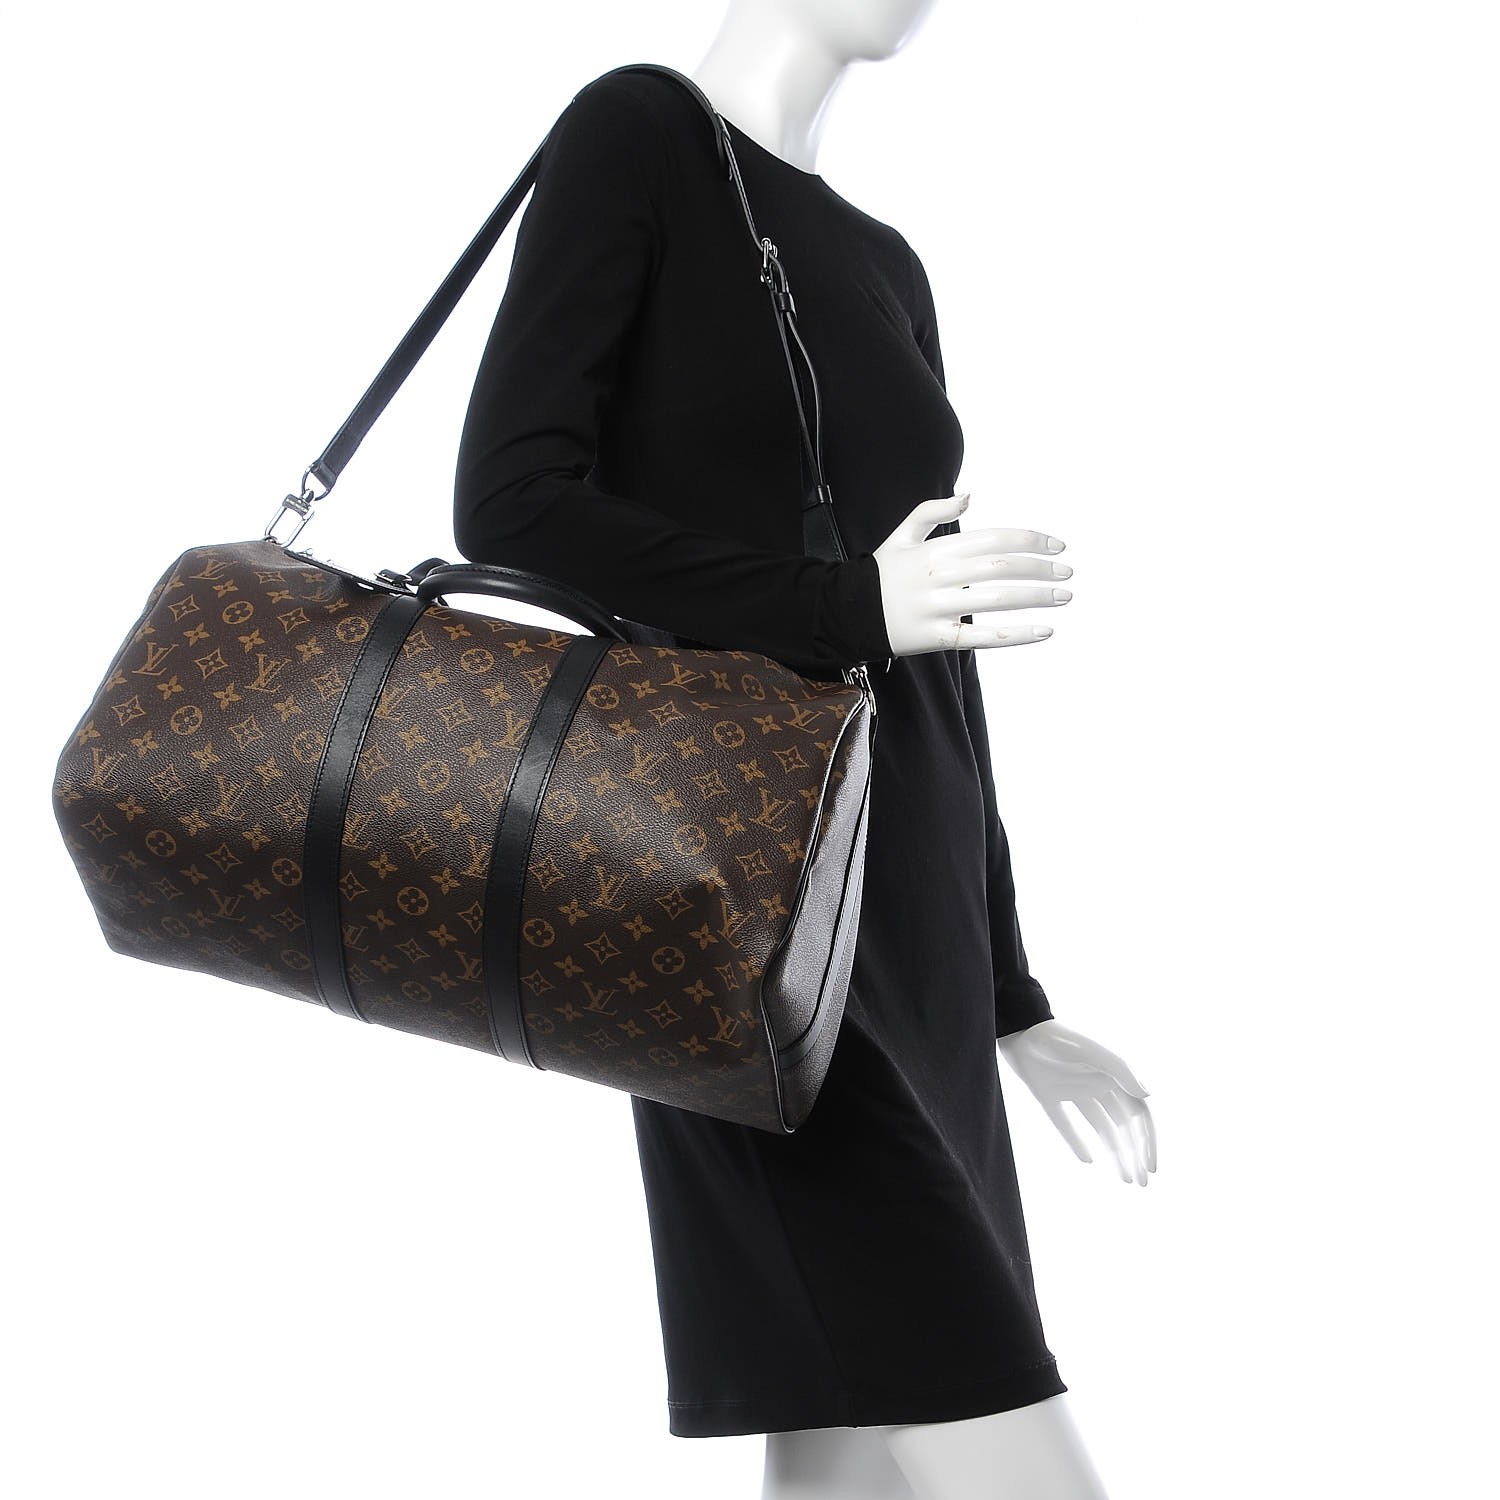 Louis Vuitton Keepall Bandouliere Monogram Macassar 45 Brown/Black